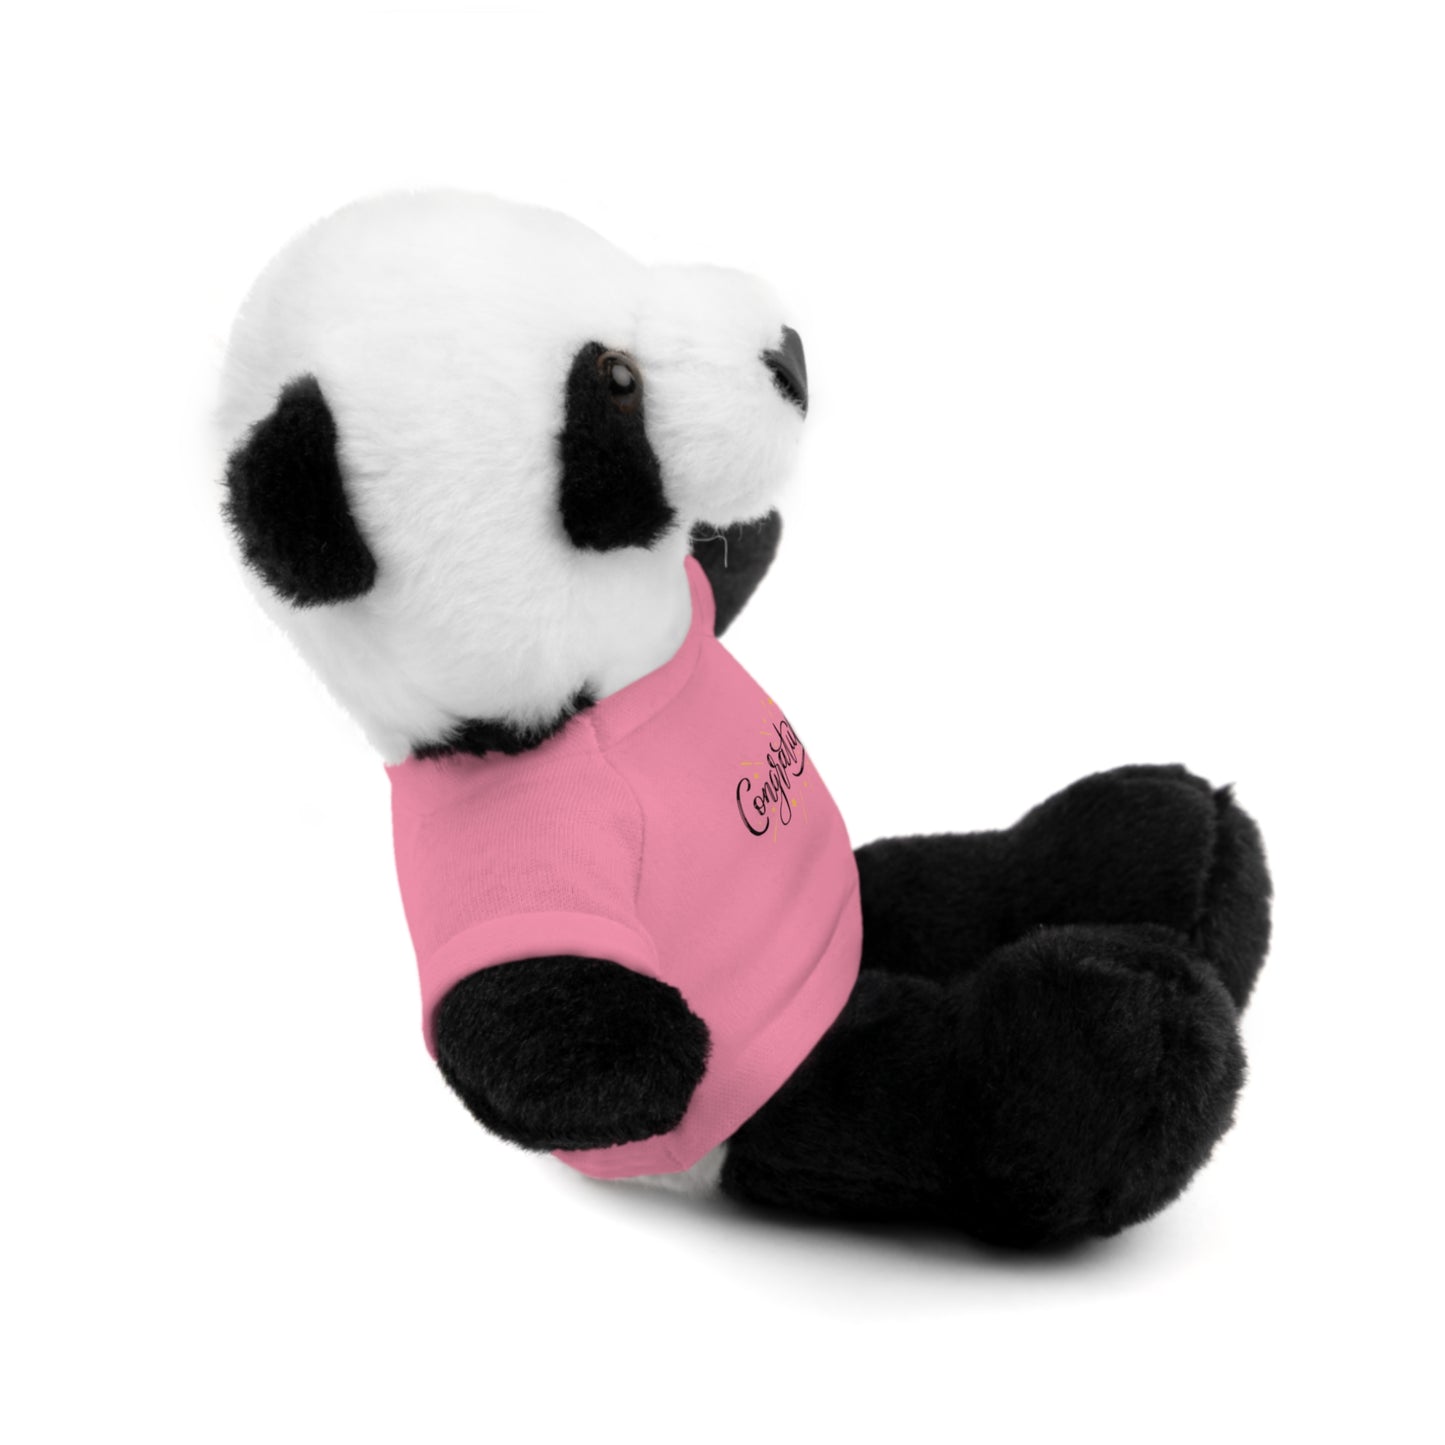 Stuffed Animals - Stuffed Animals with T-Shirt, Panda, Lion, Bear, Bunny, Jaguar, Sheep